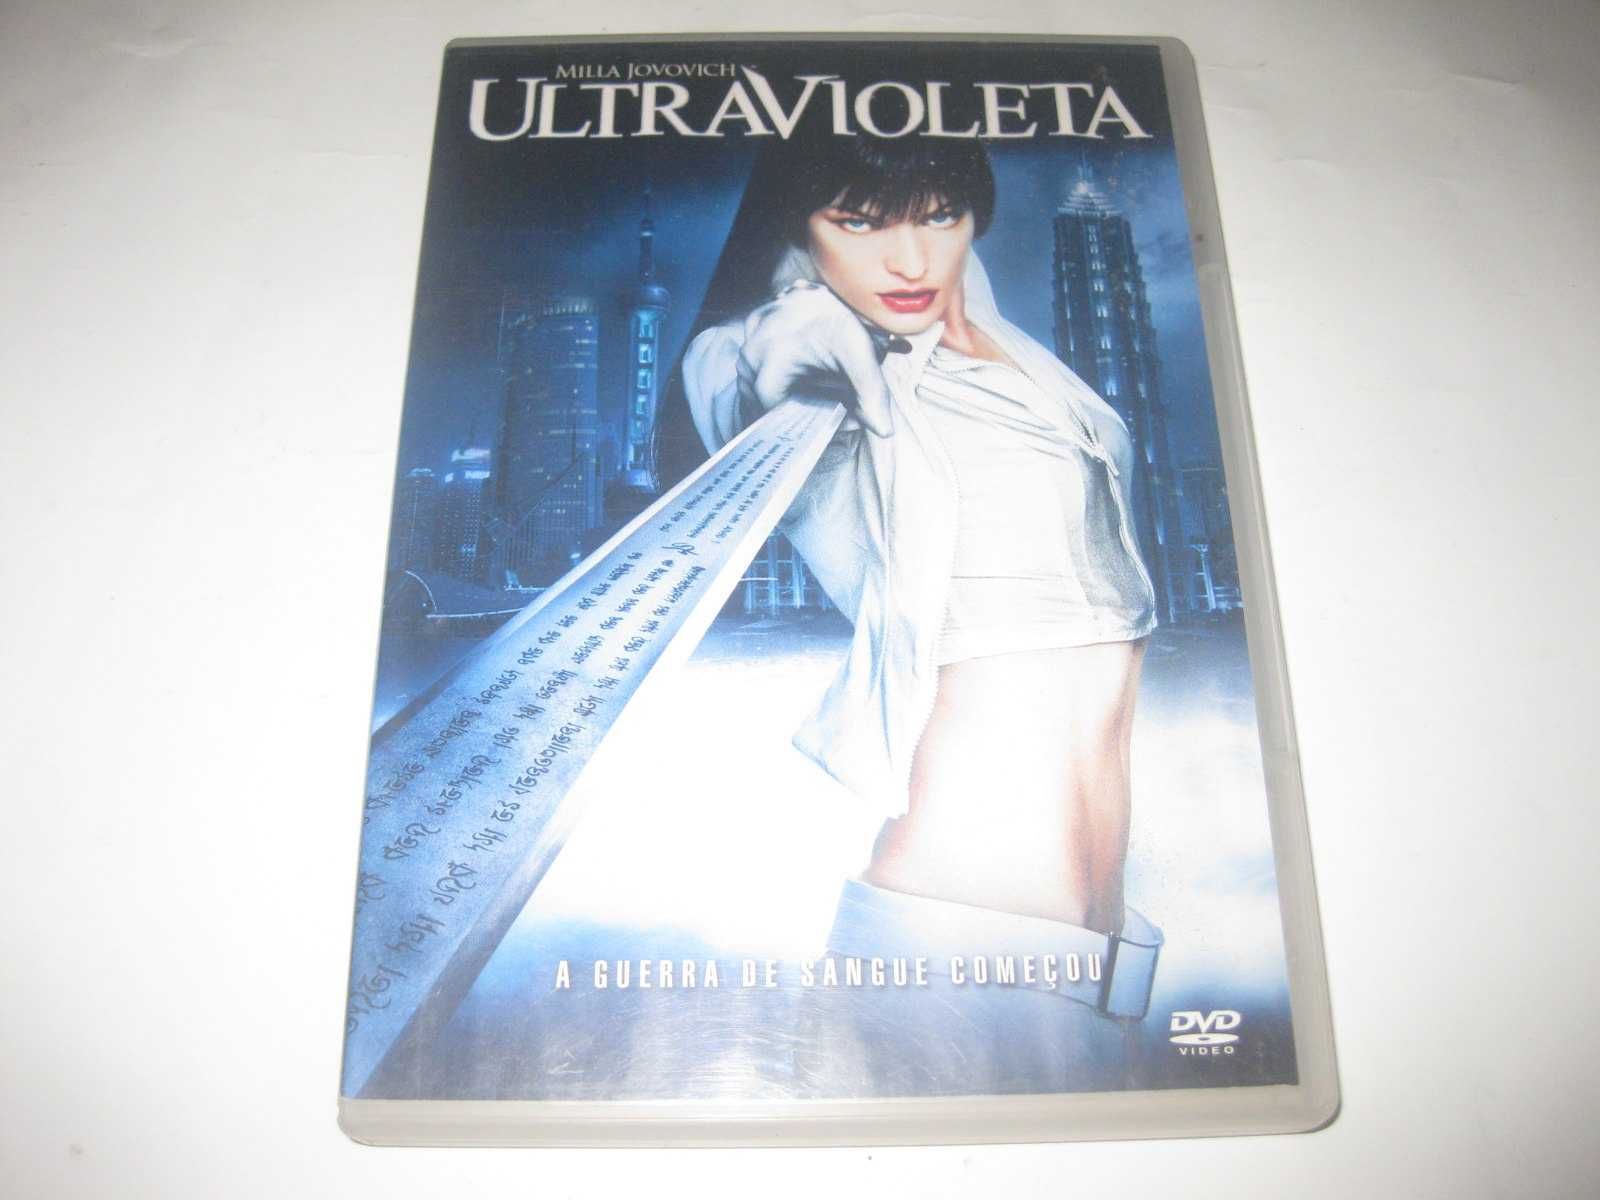 DVD "Ultravioleta" com Milla Jovovich